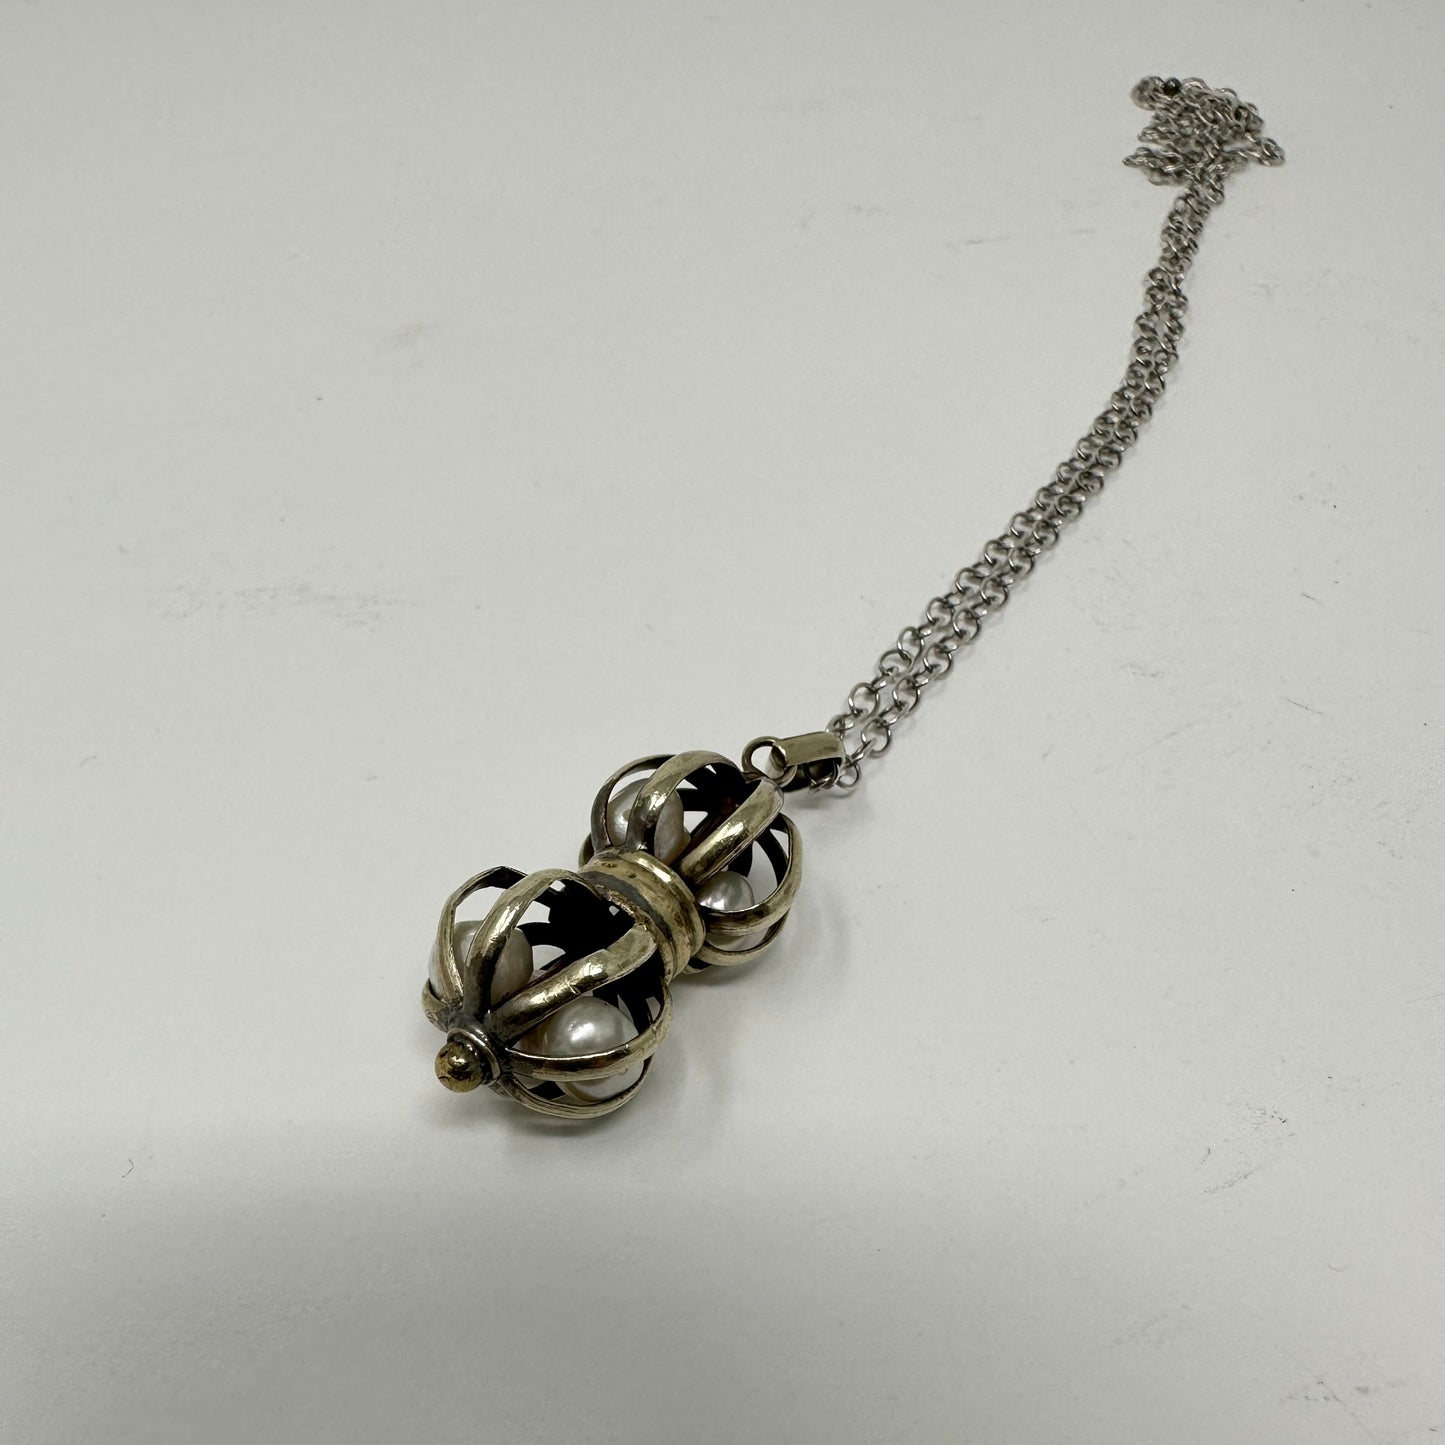 Silver vintage pendant